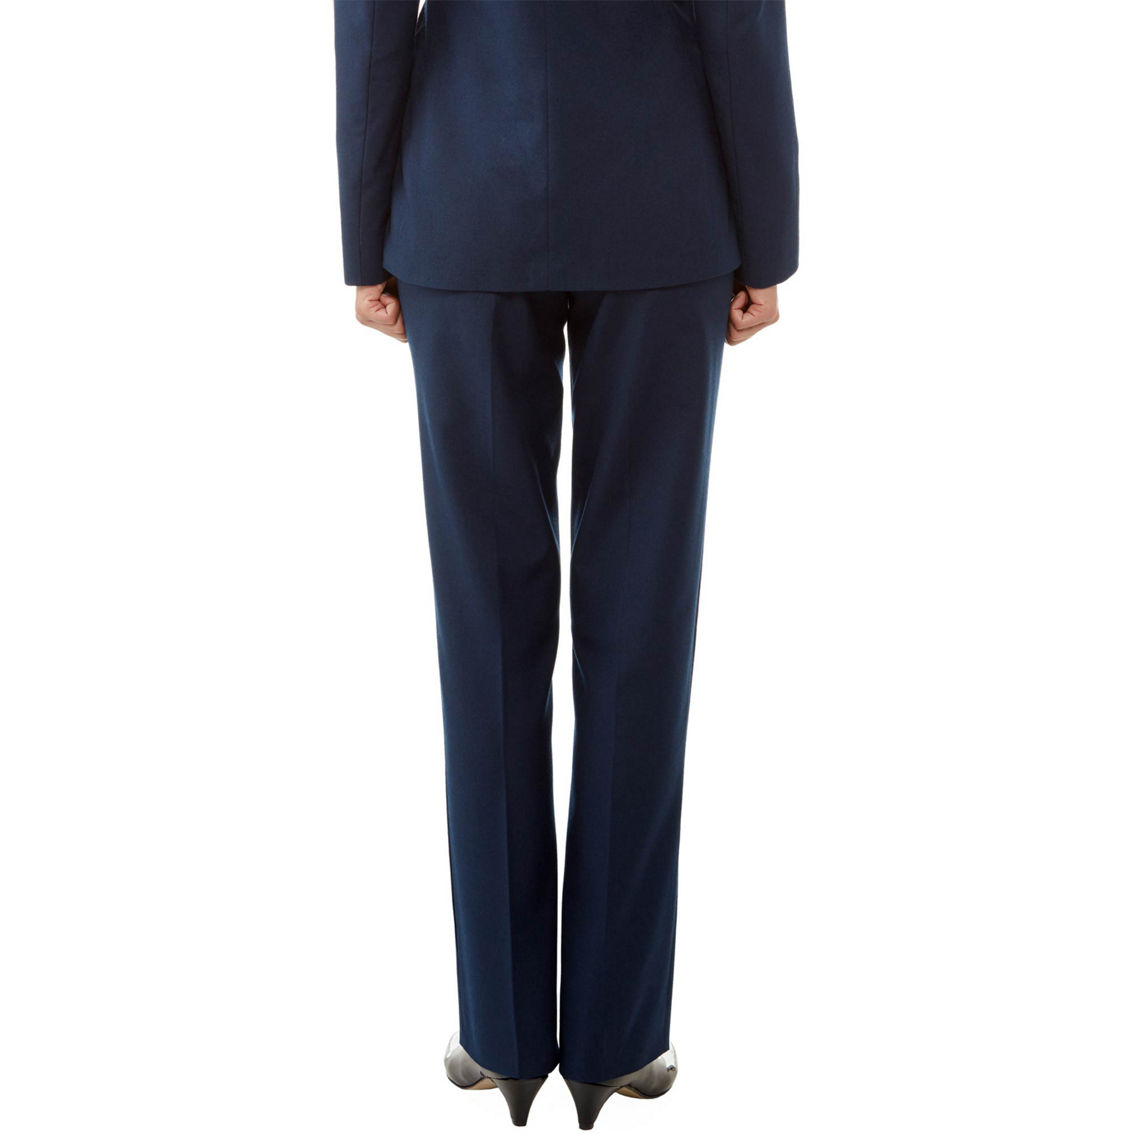 Air Force Service Dress Uniform Slacks Female - Image 2 of 4